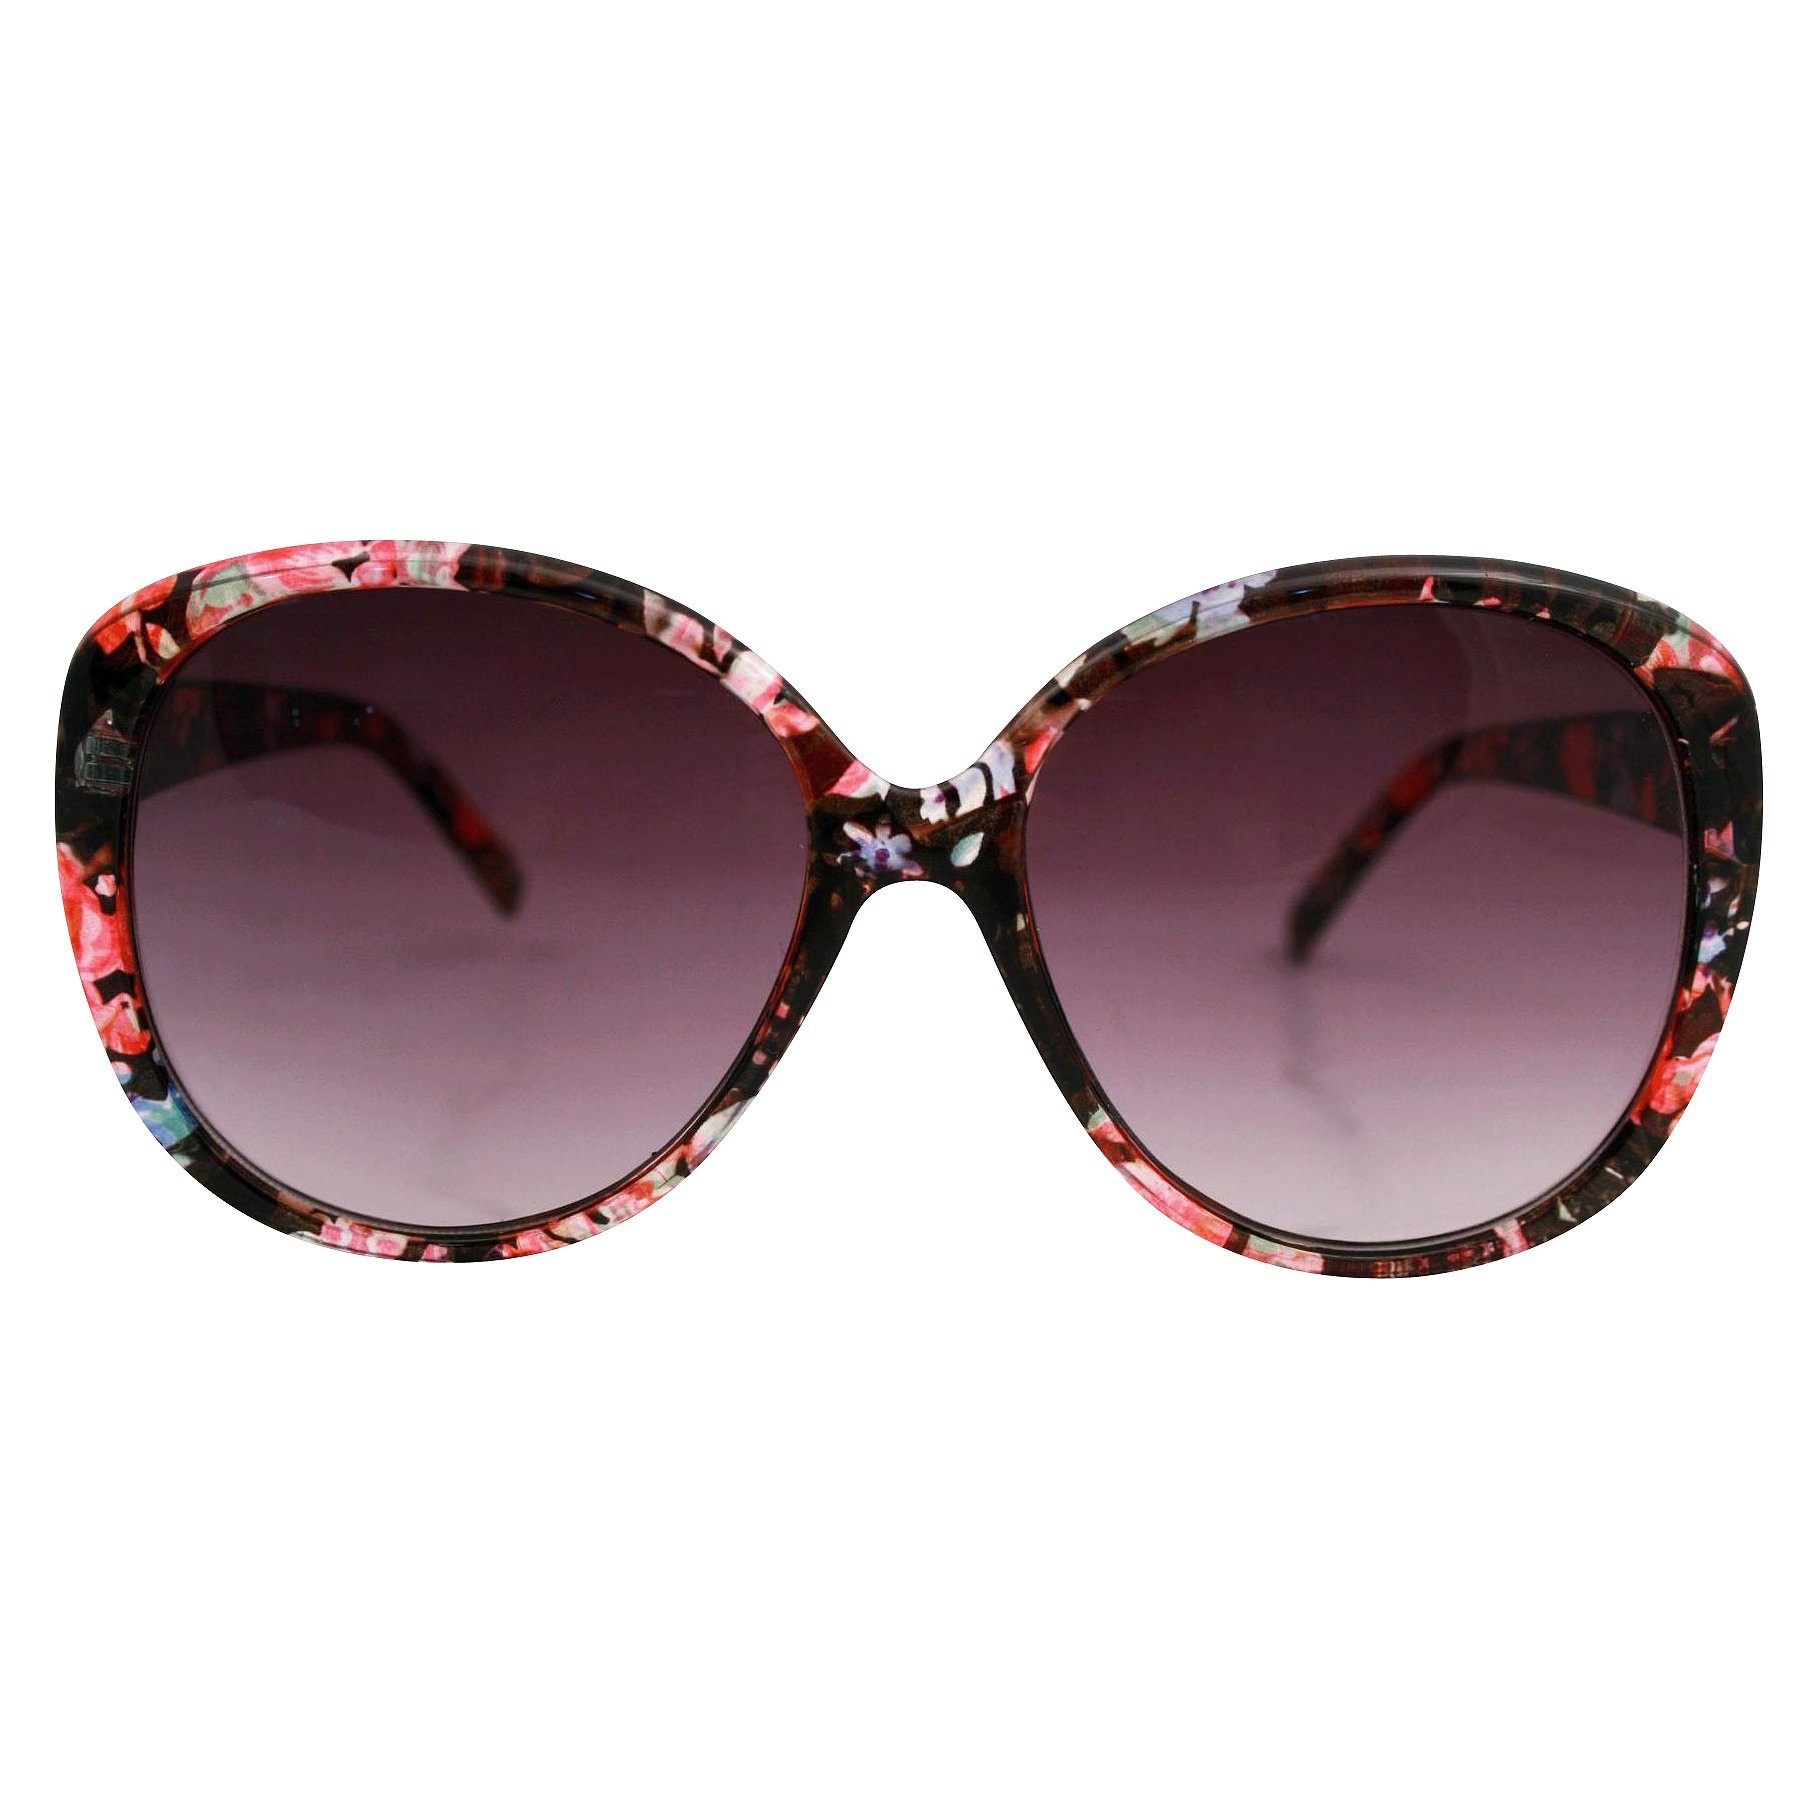 Floral Cat Eye Sunglasses in Black/Pink